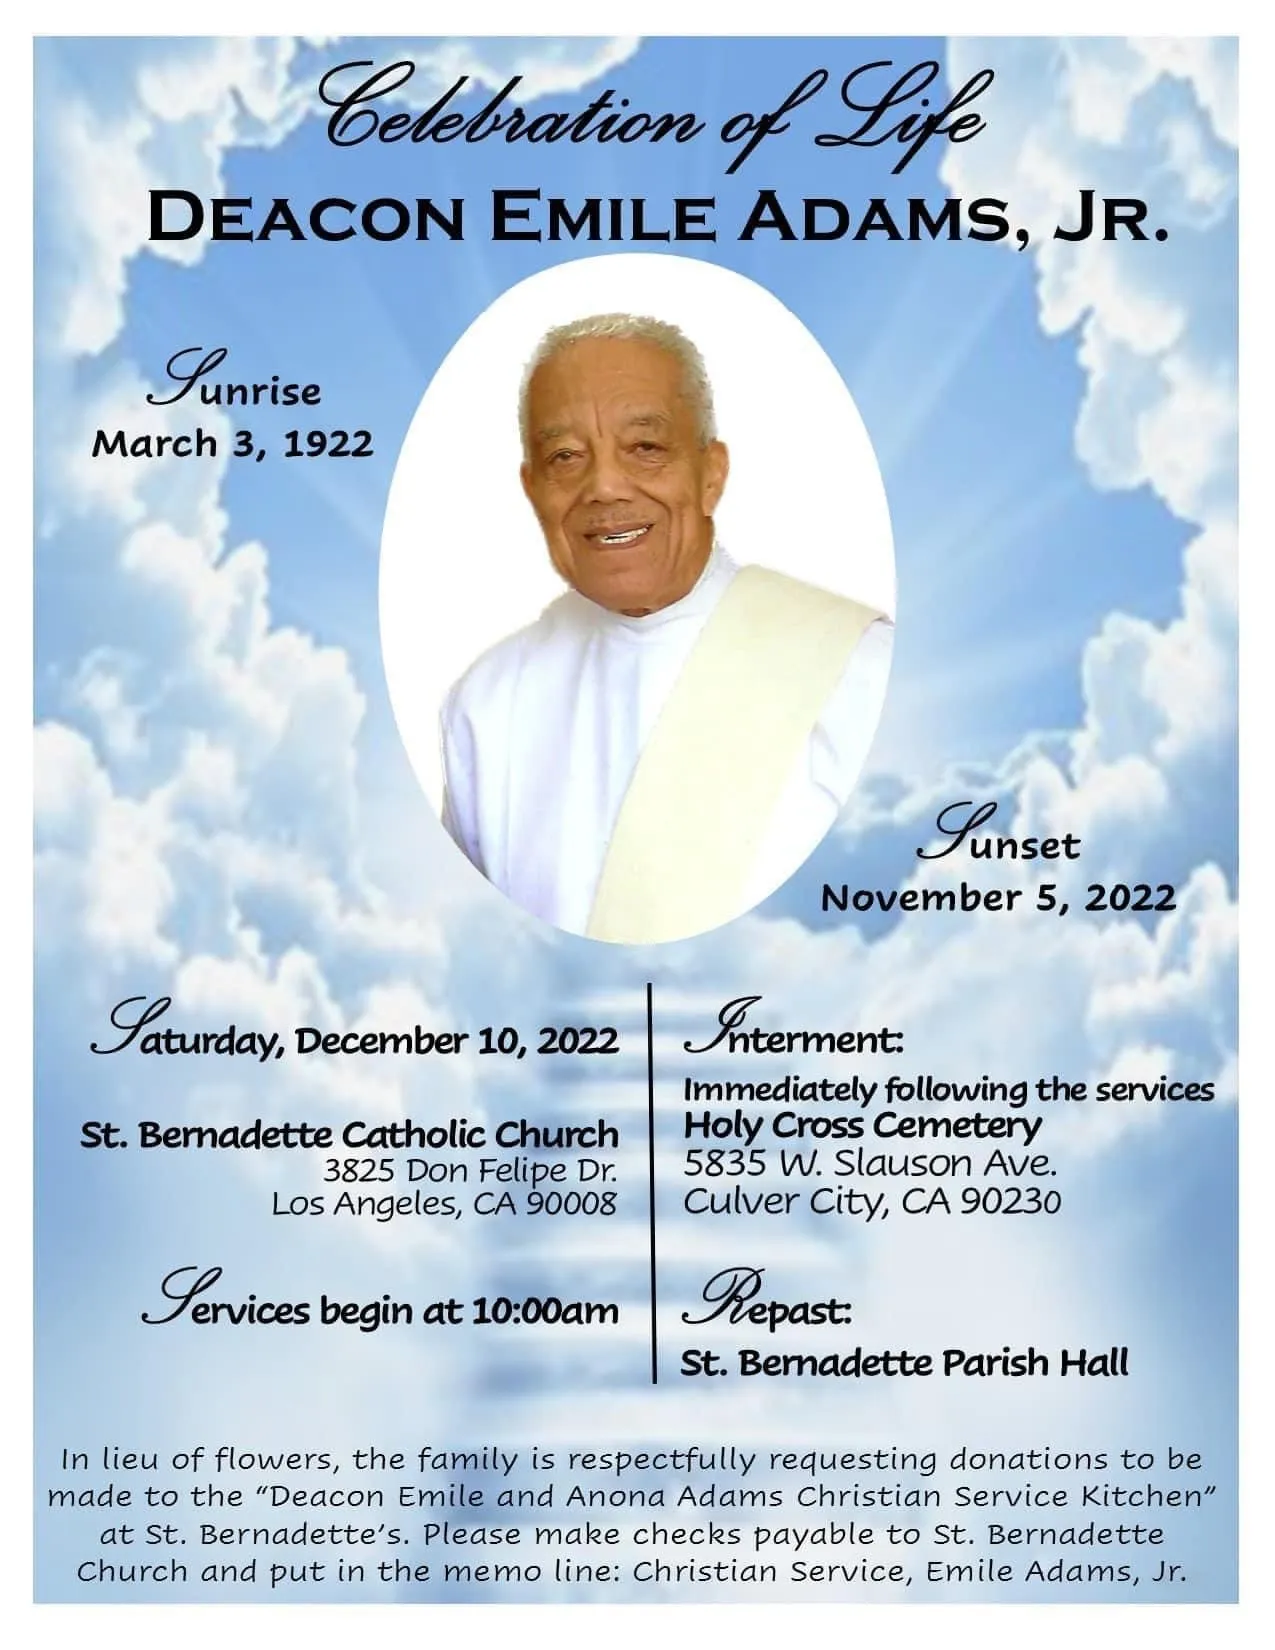 Emile Adams, oldest US Catholic deacon, dead at 100